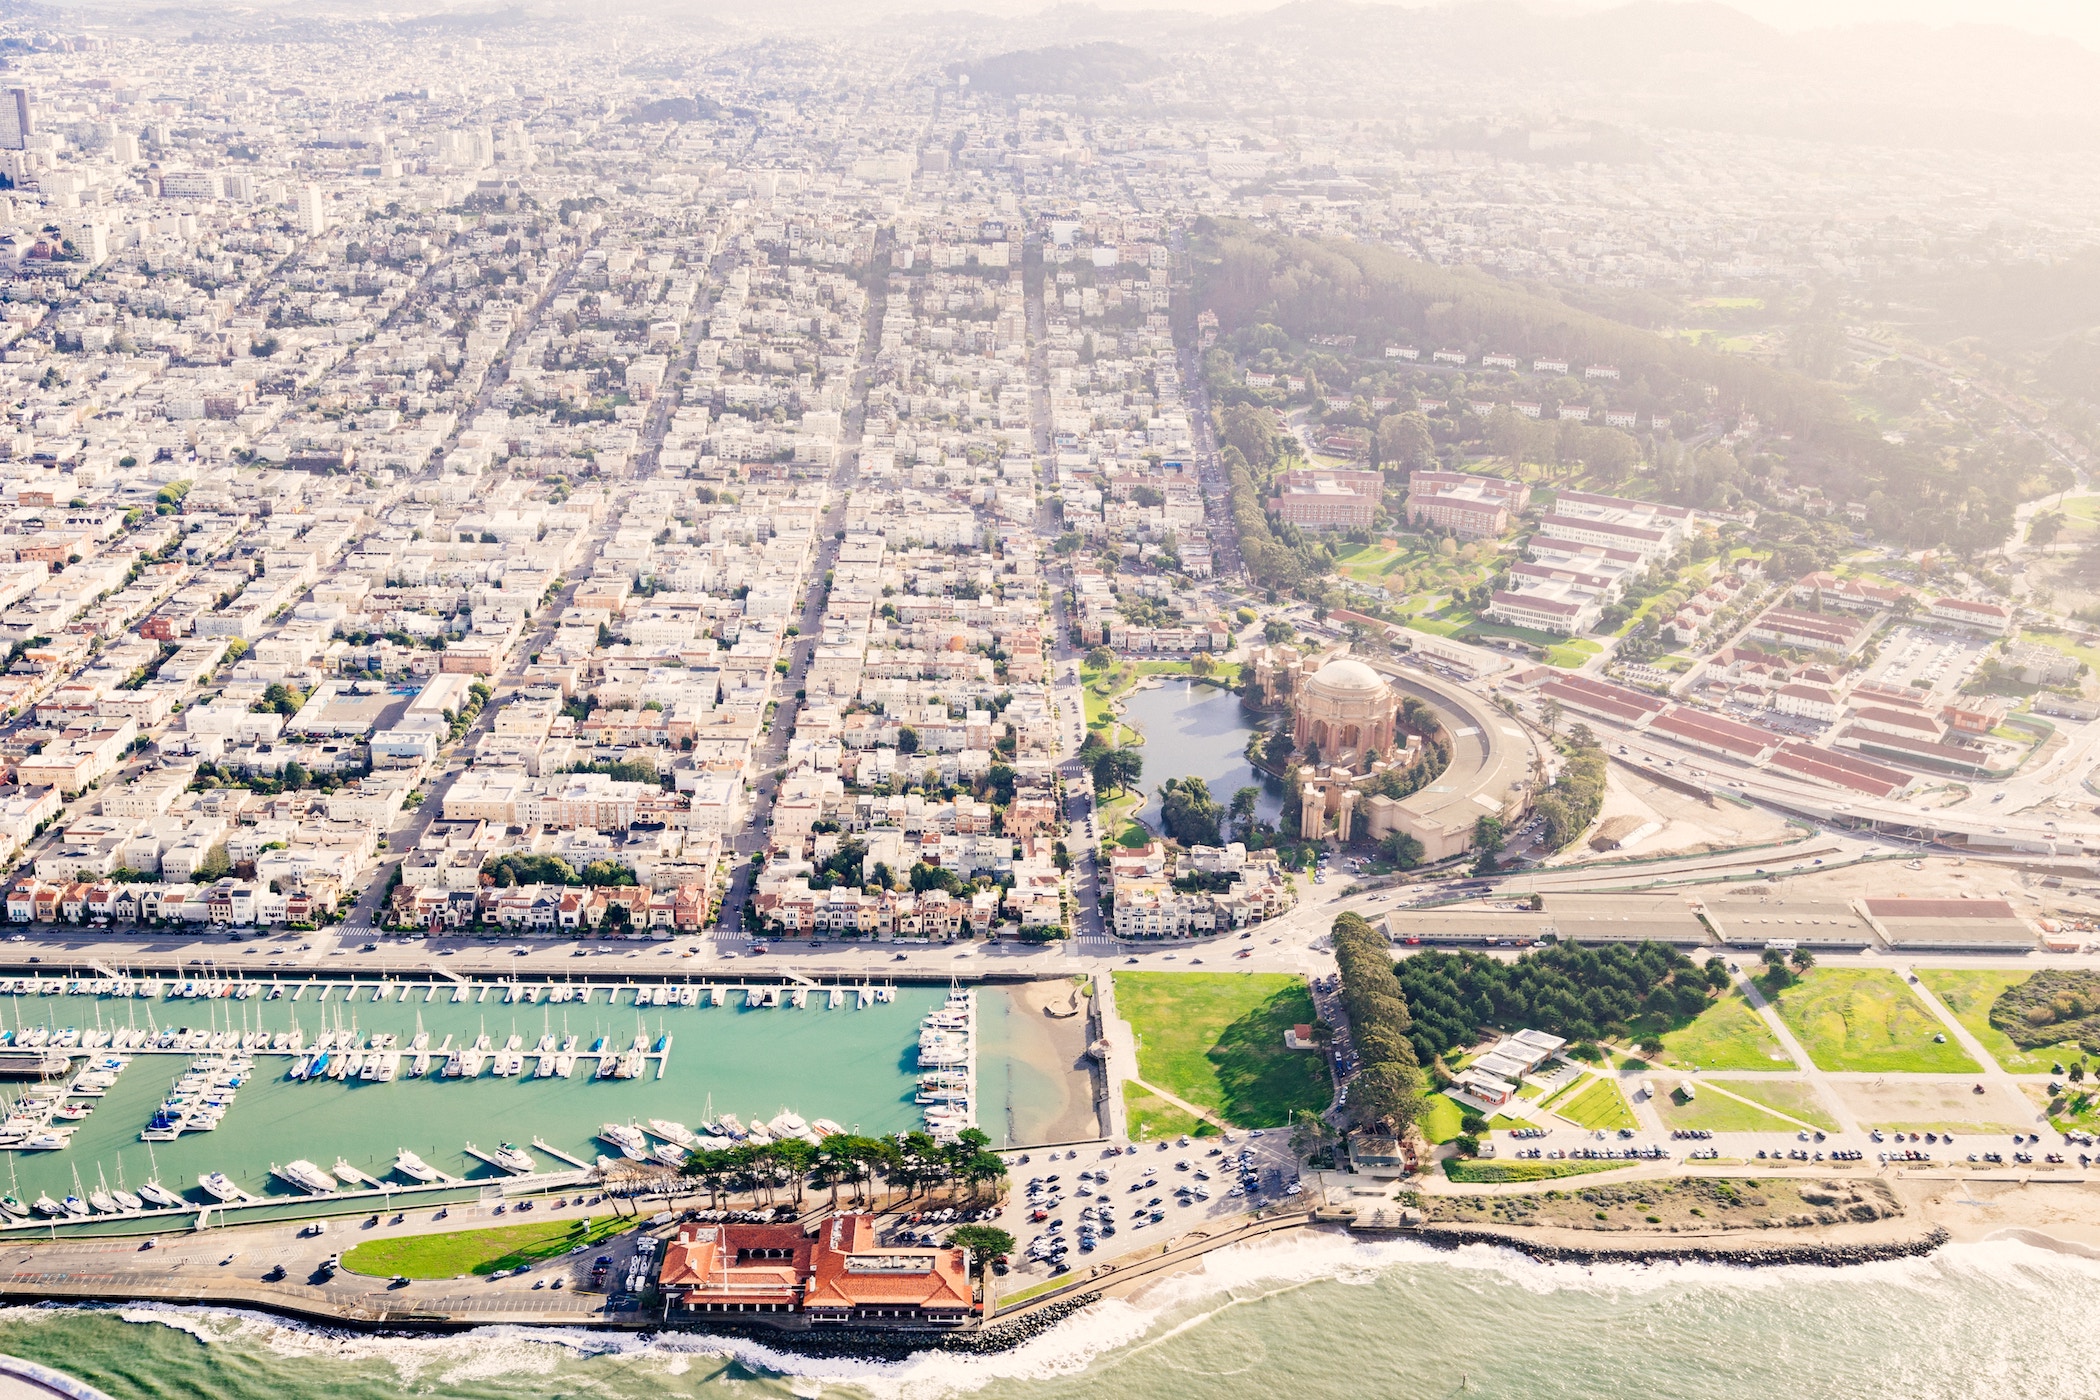 Aerial view of California